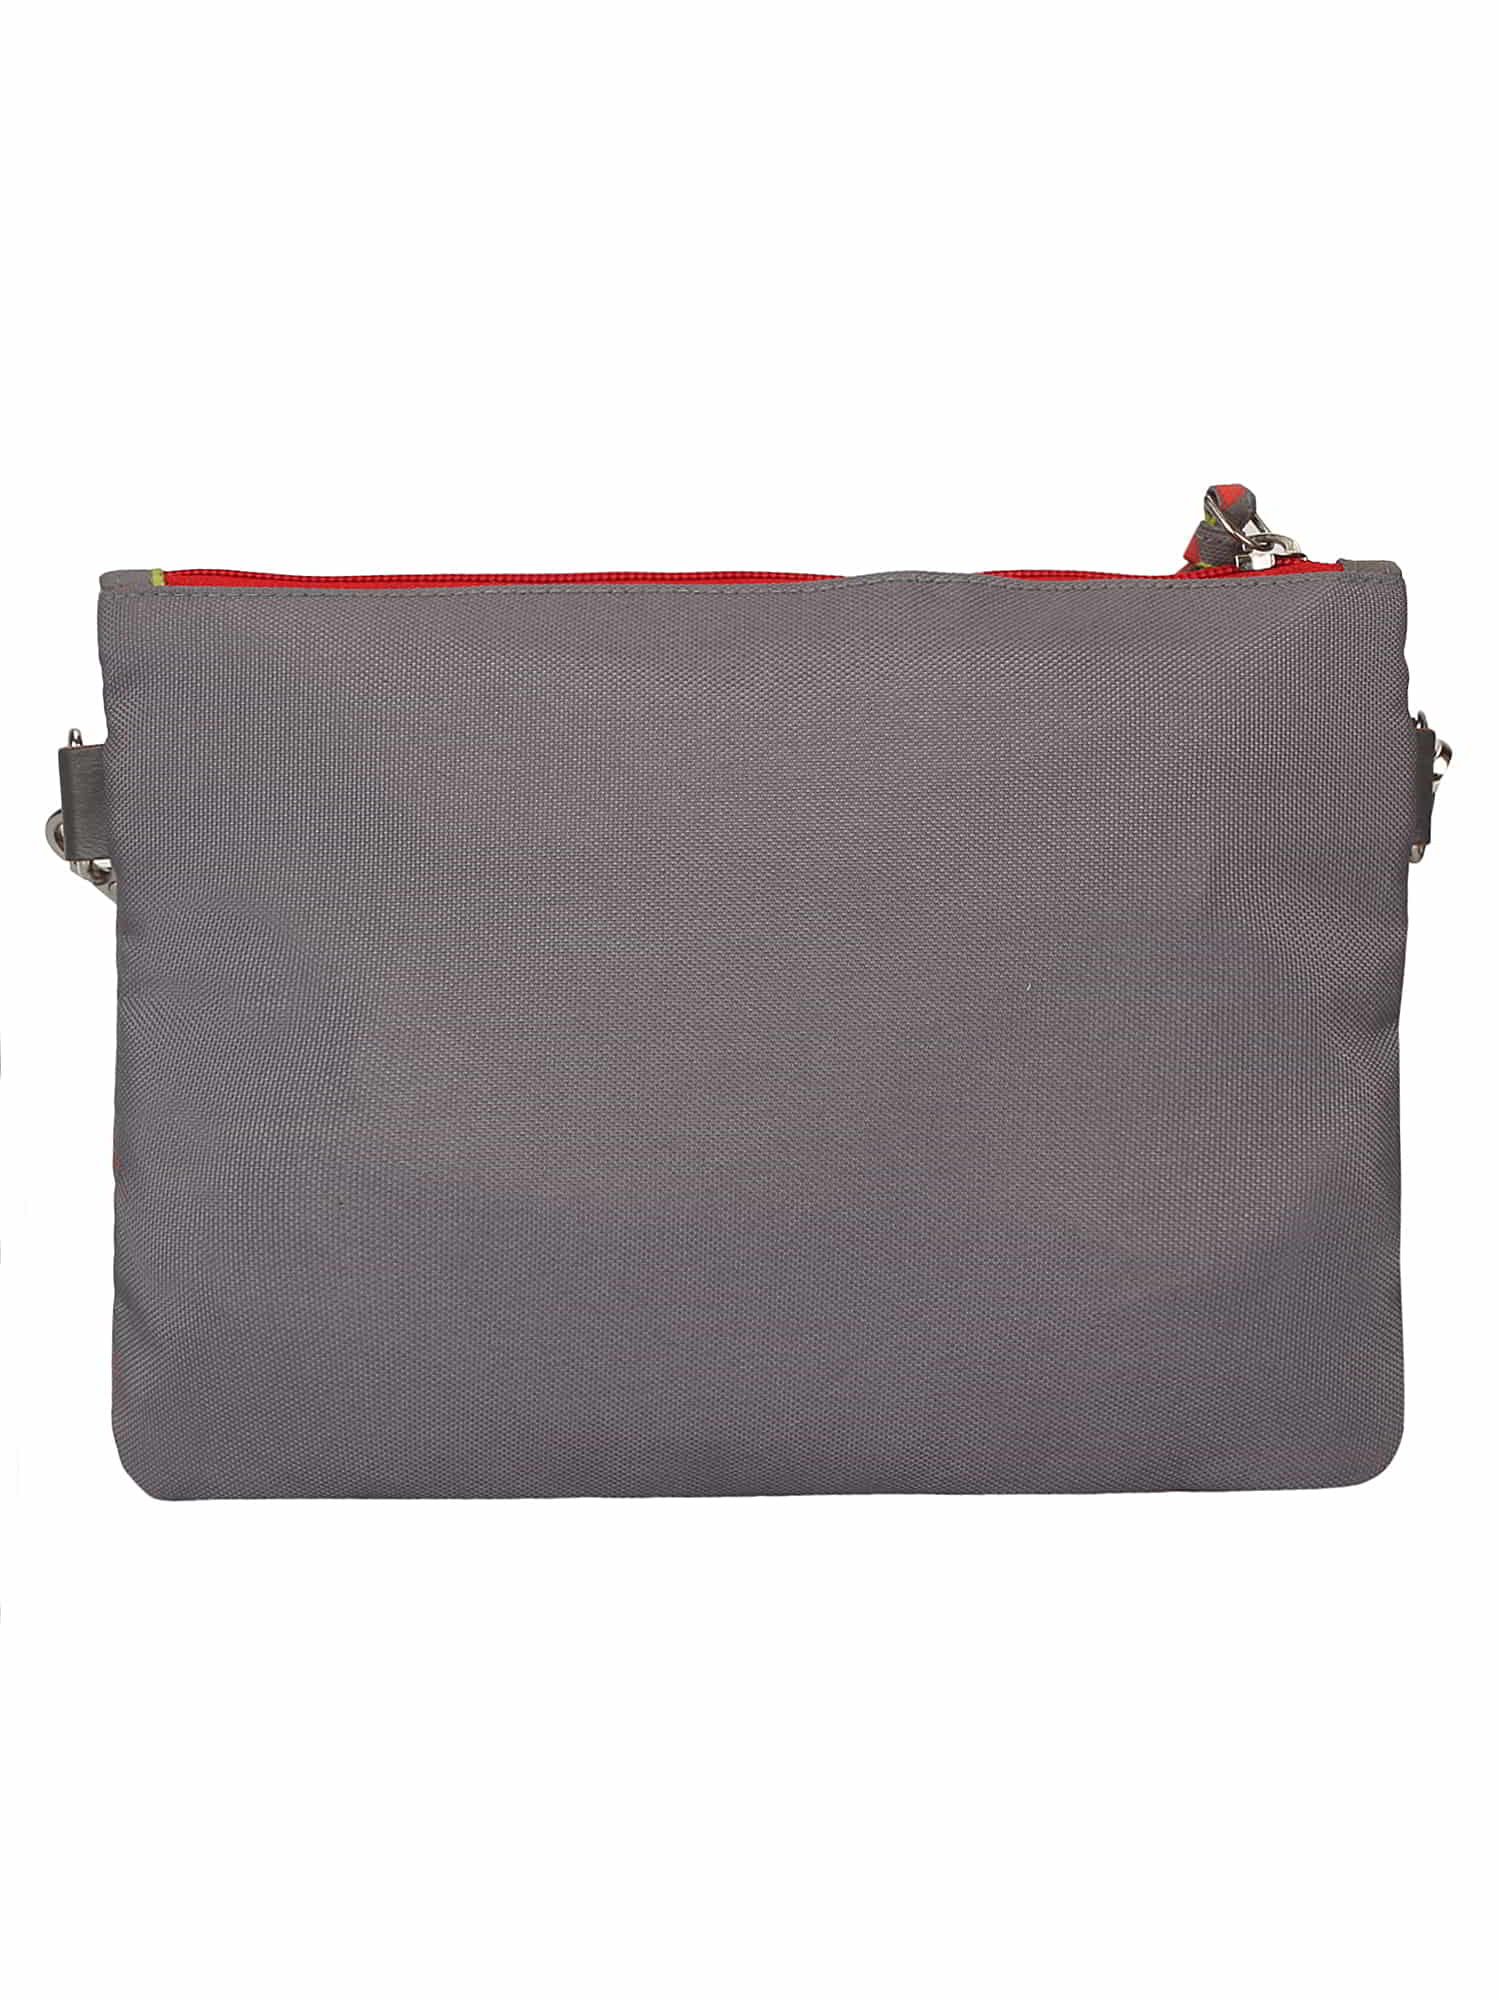 Geomat Printed Polyester Sling Bag